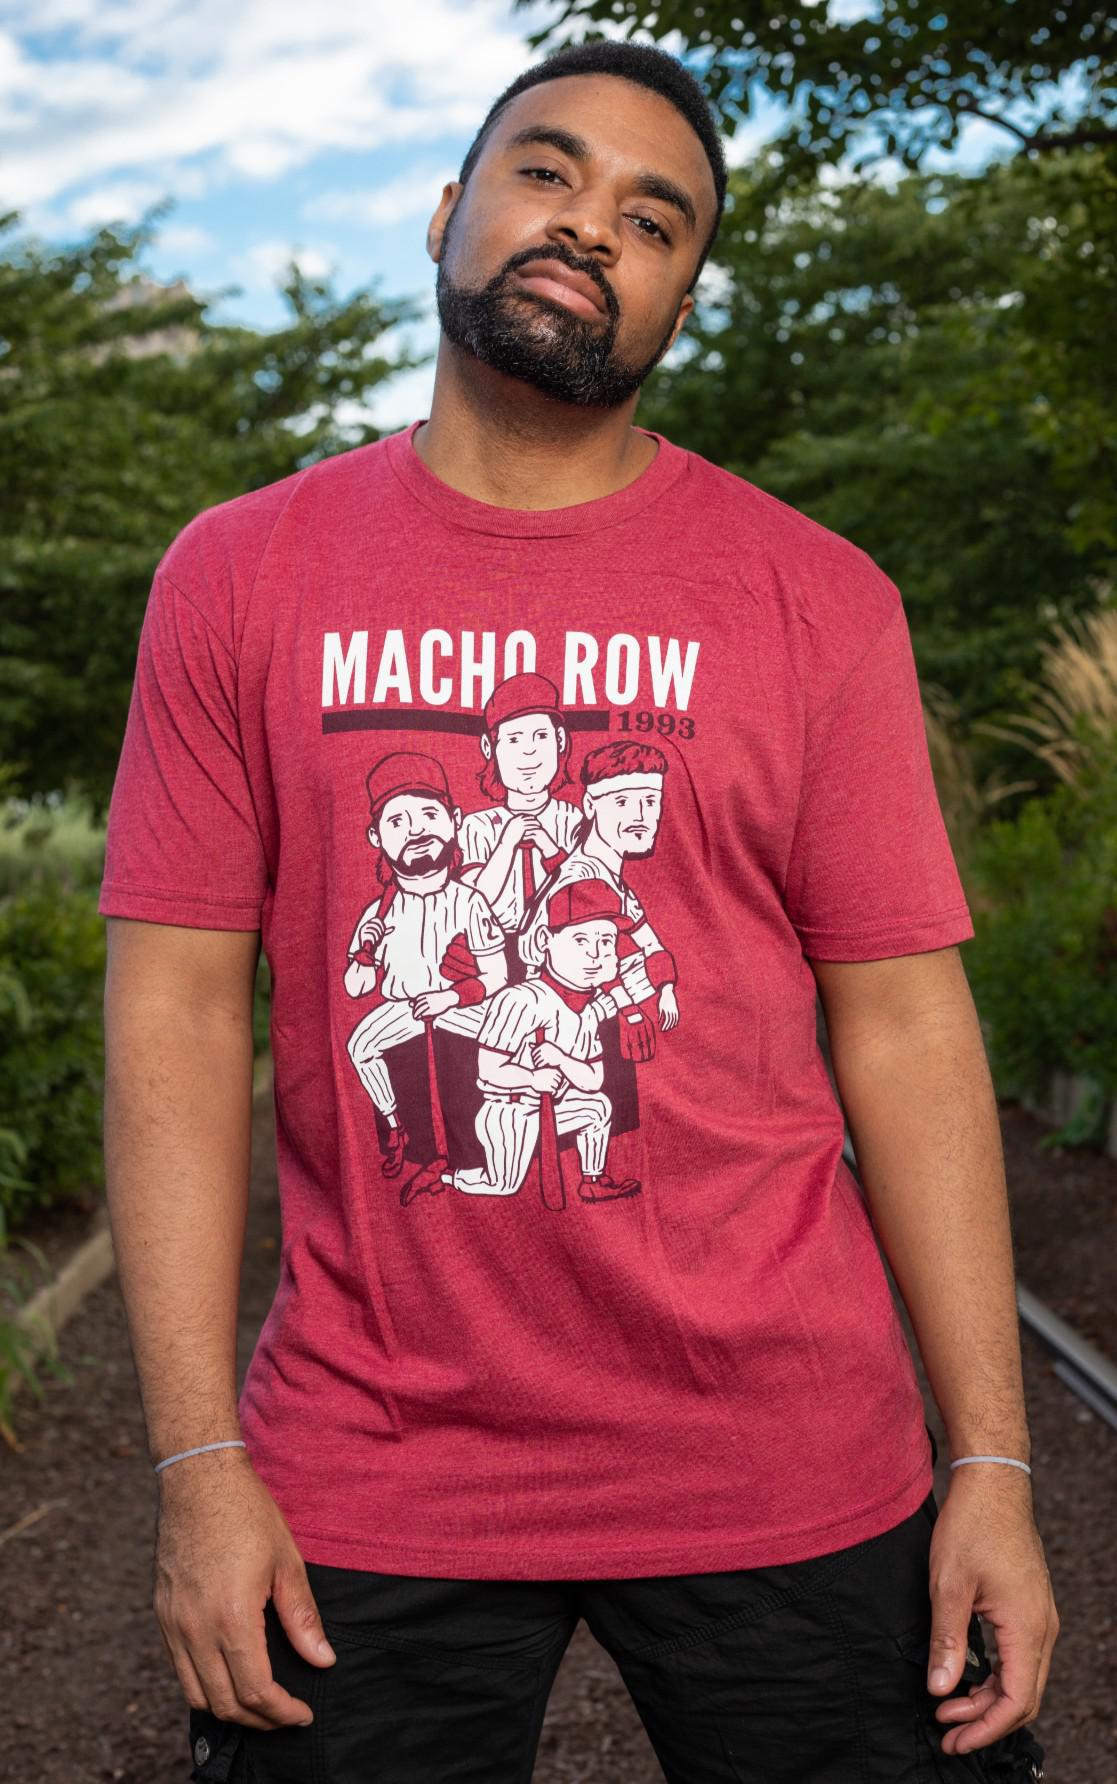 Macho Row 1993 t-shirt